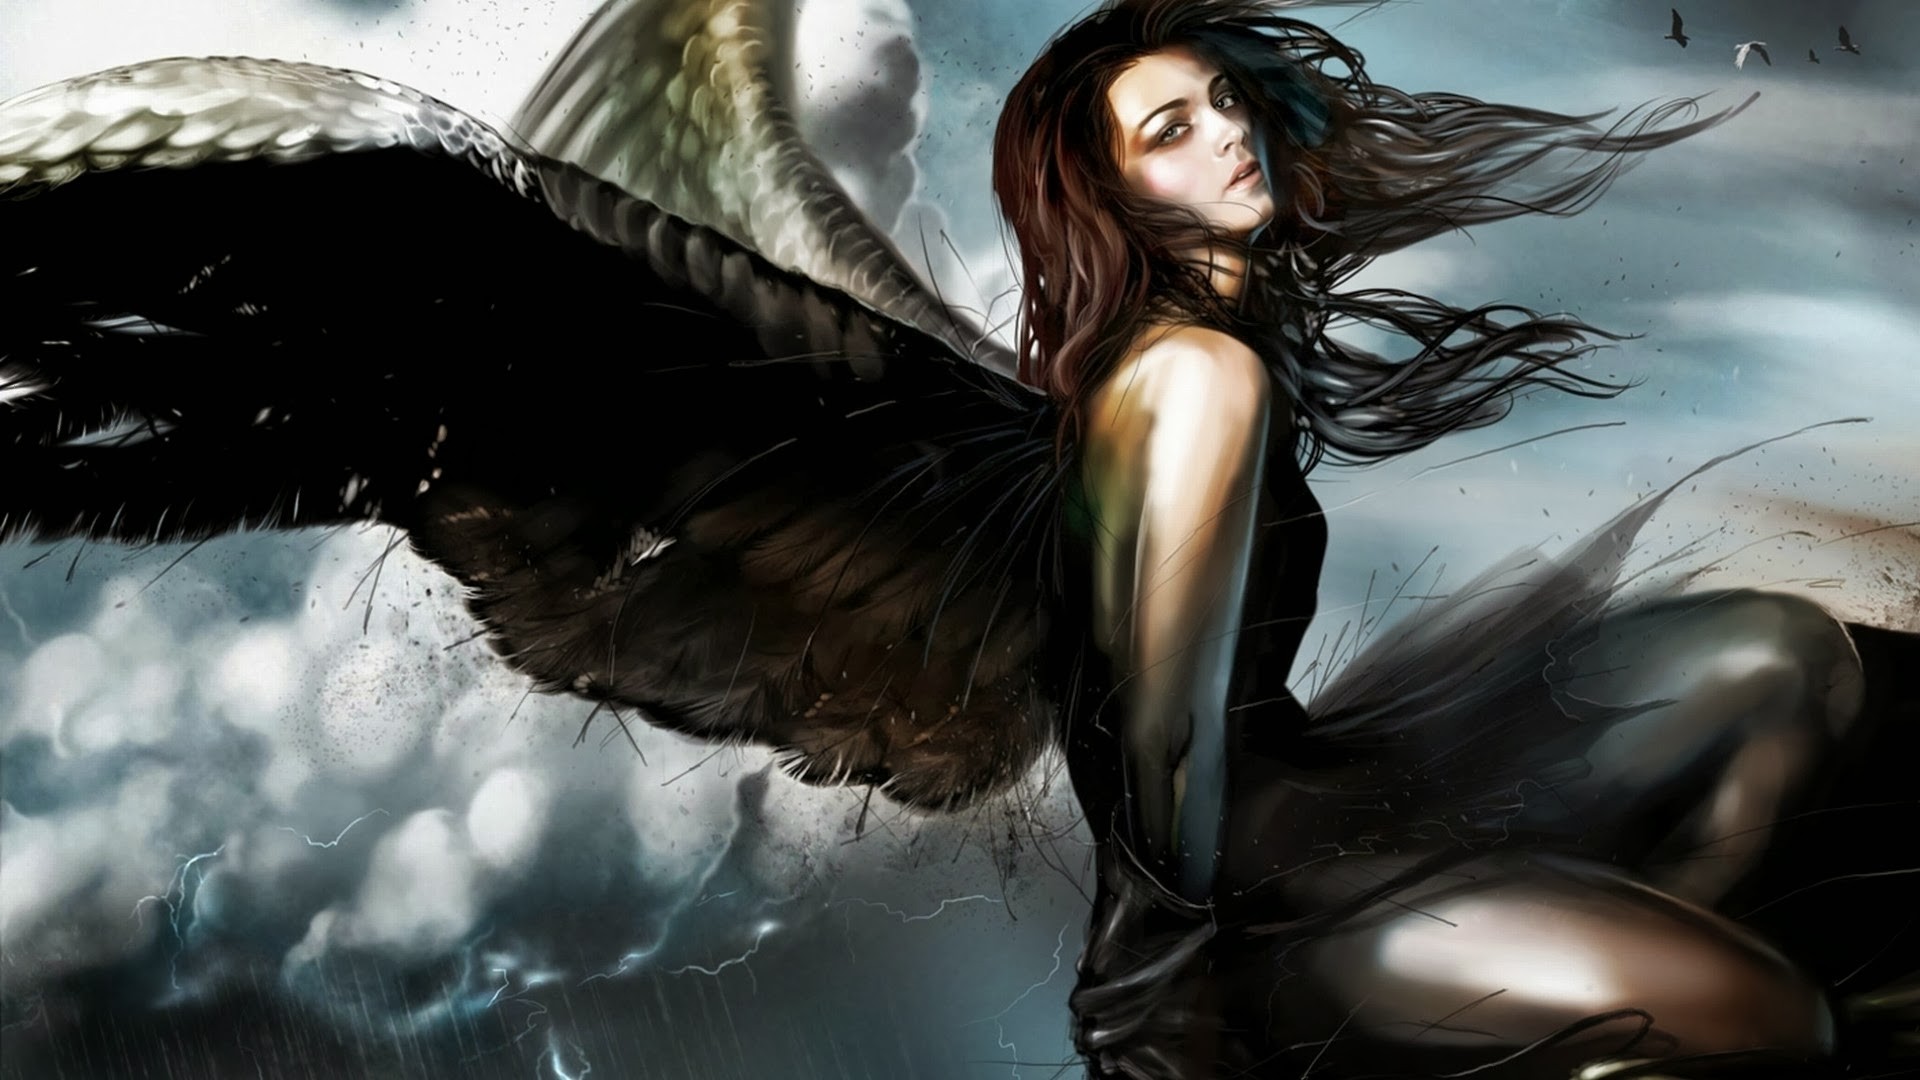 General 1920x1080 wings fantasy art women fantasy girl dark hair looking at viewer